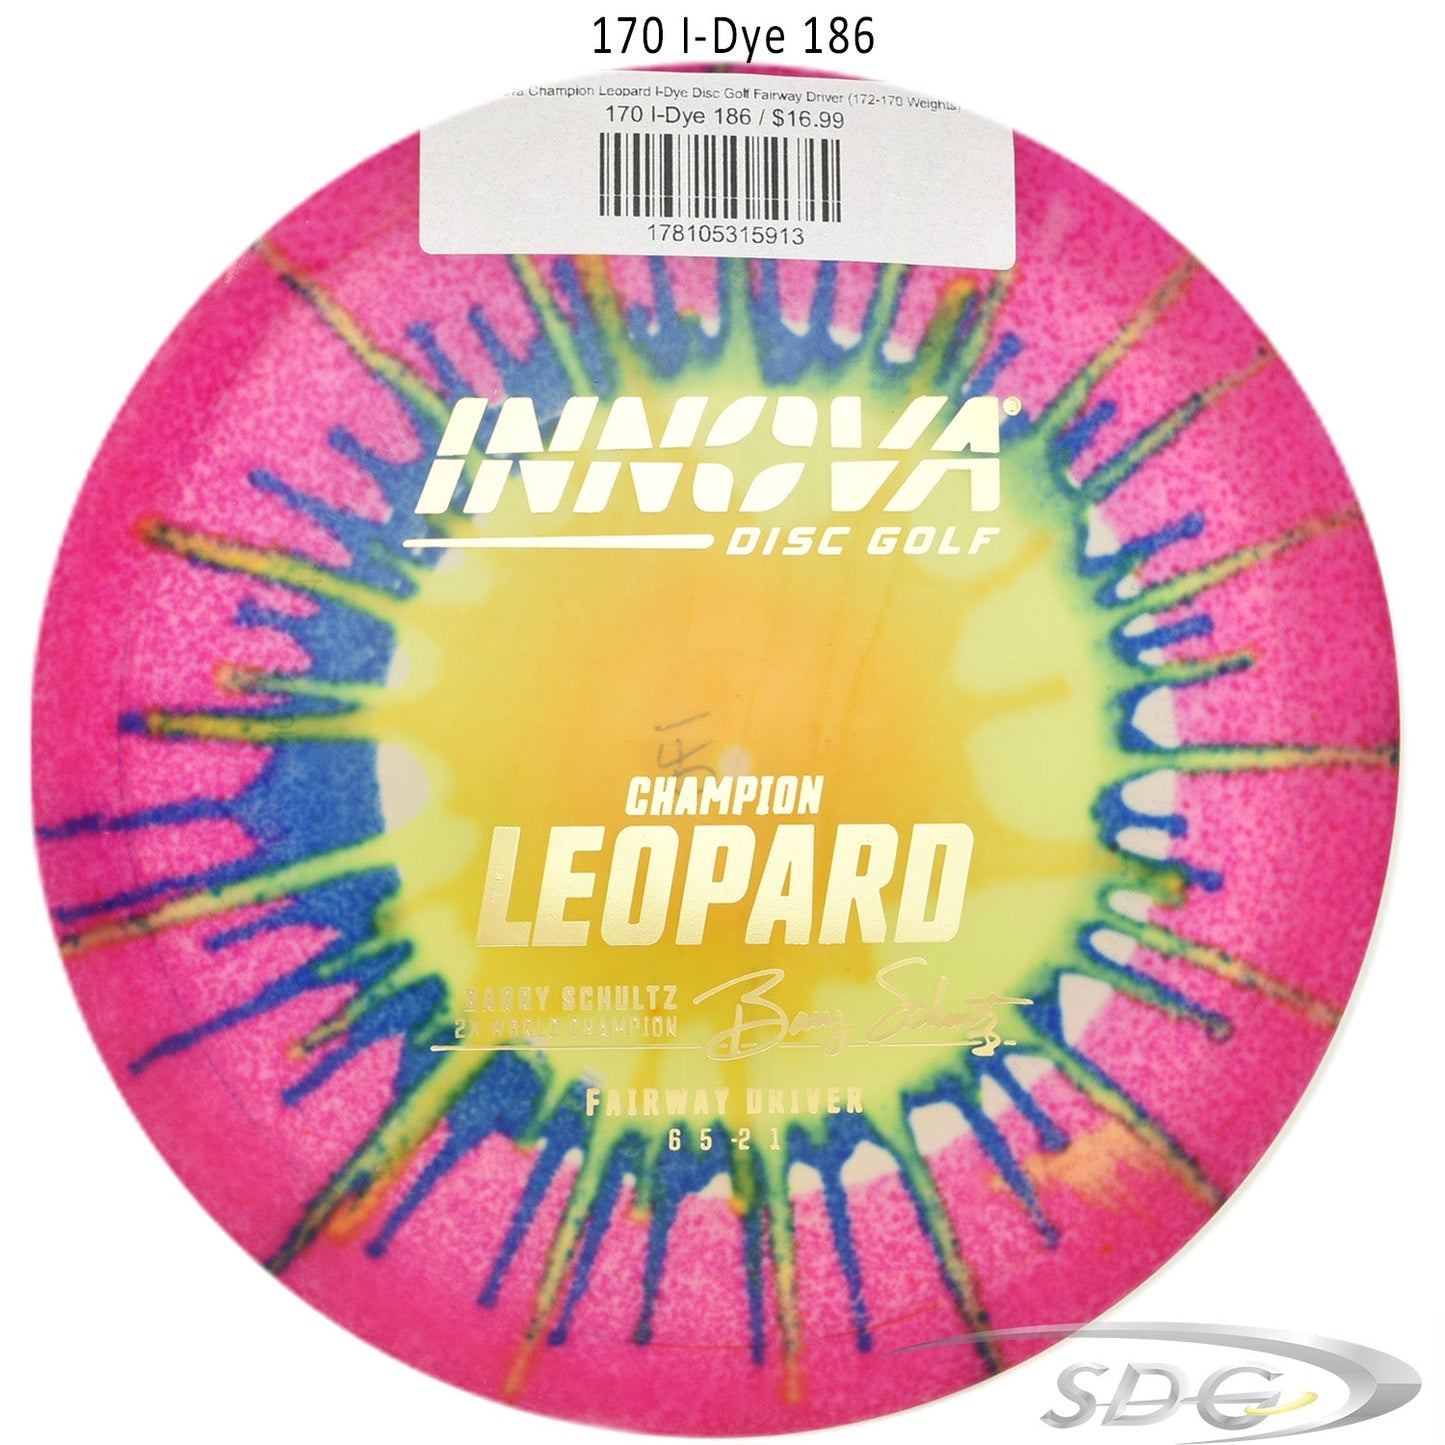 innova-champion-leopard-i-dye-disc-golf-fairway-driver 170 I-Dye 186 